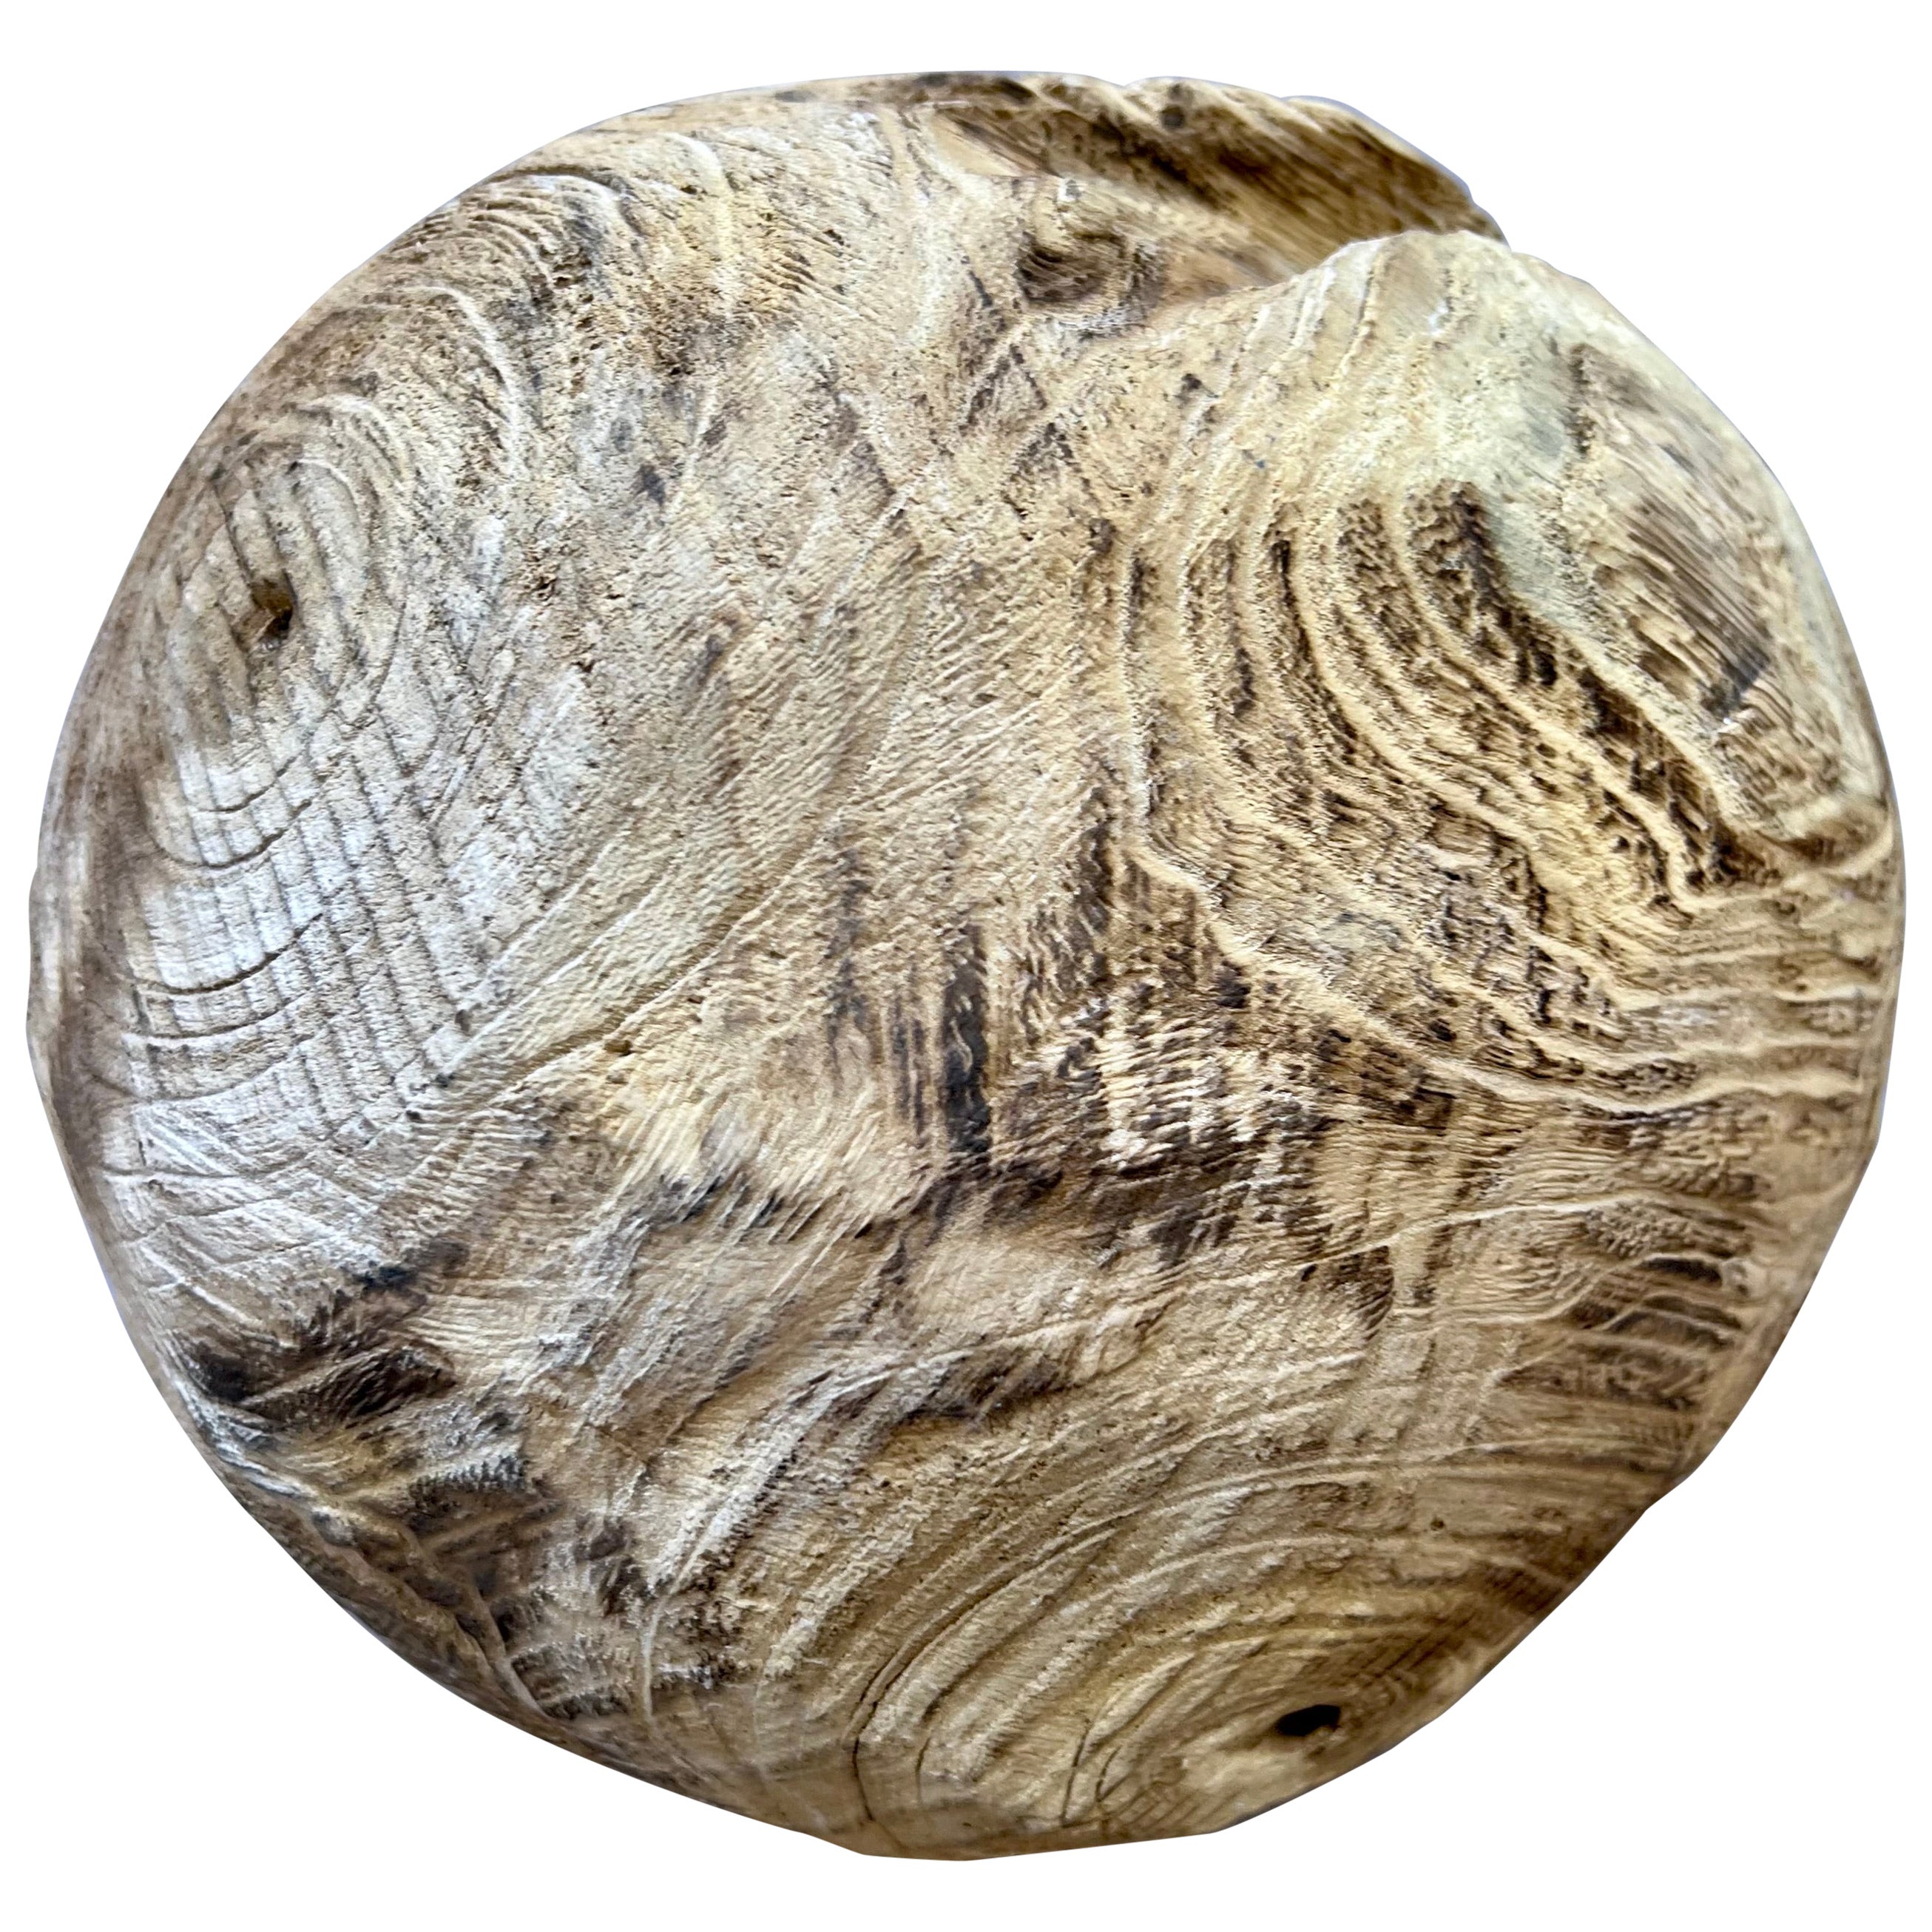 Organic Modern Hand-Carved Wood Folk Art Ball Sphere